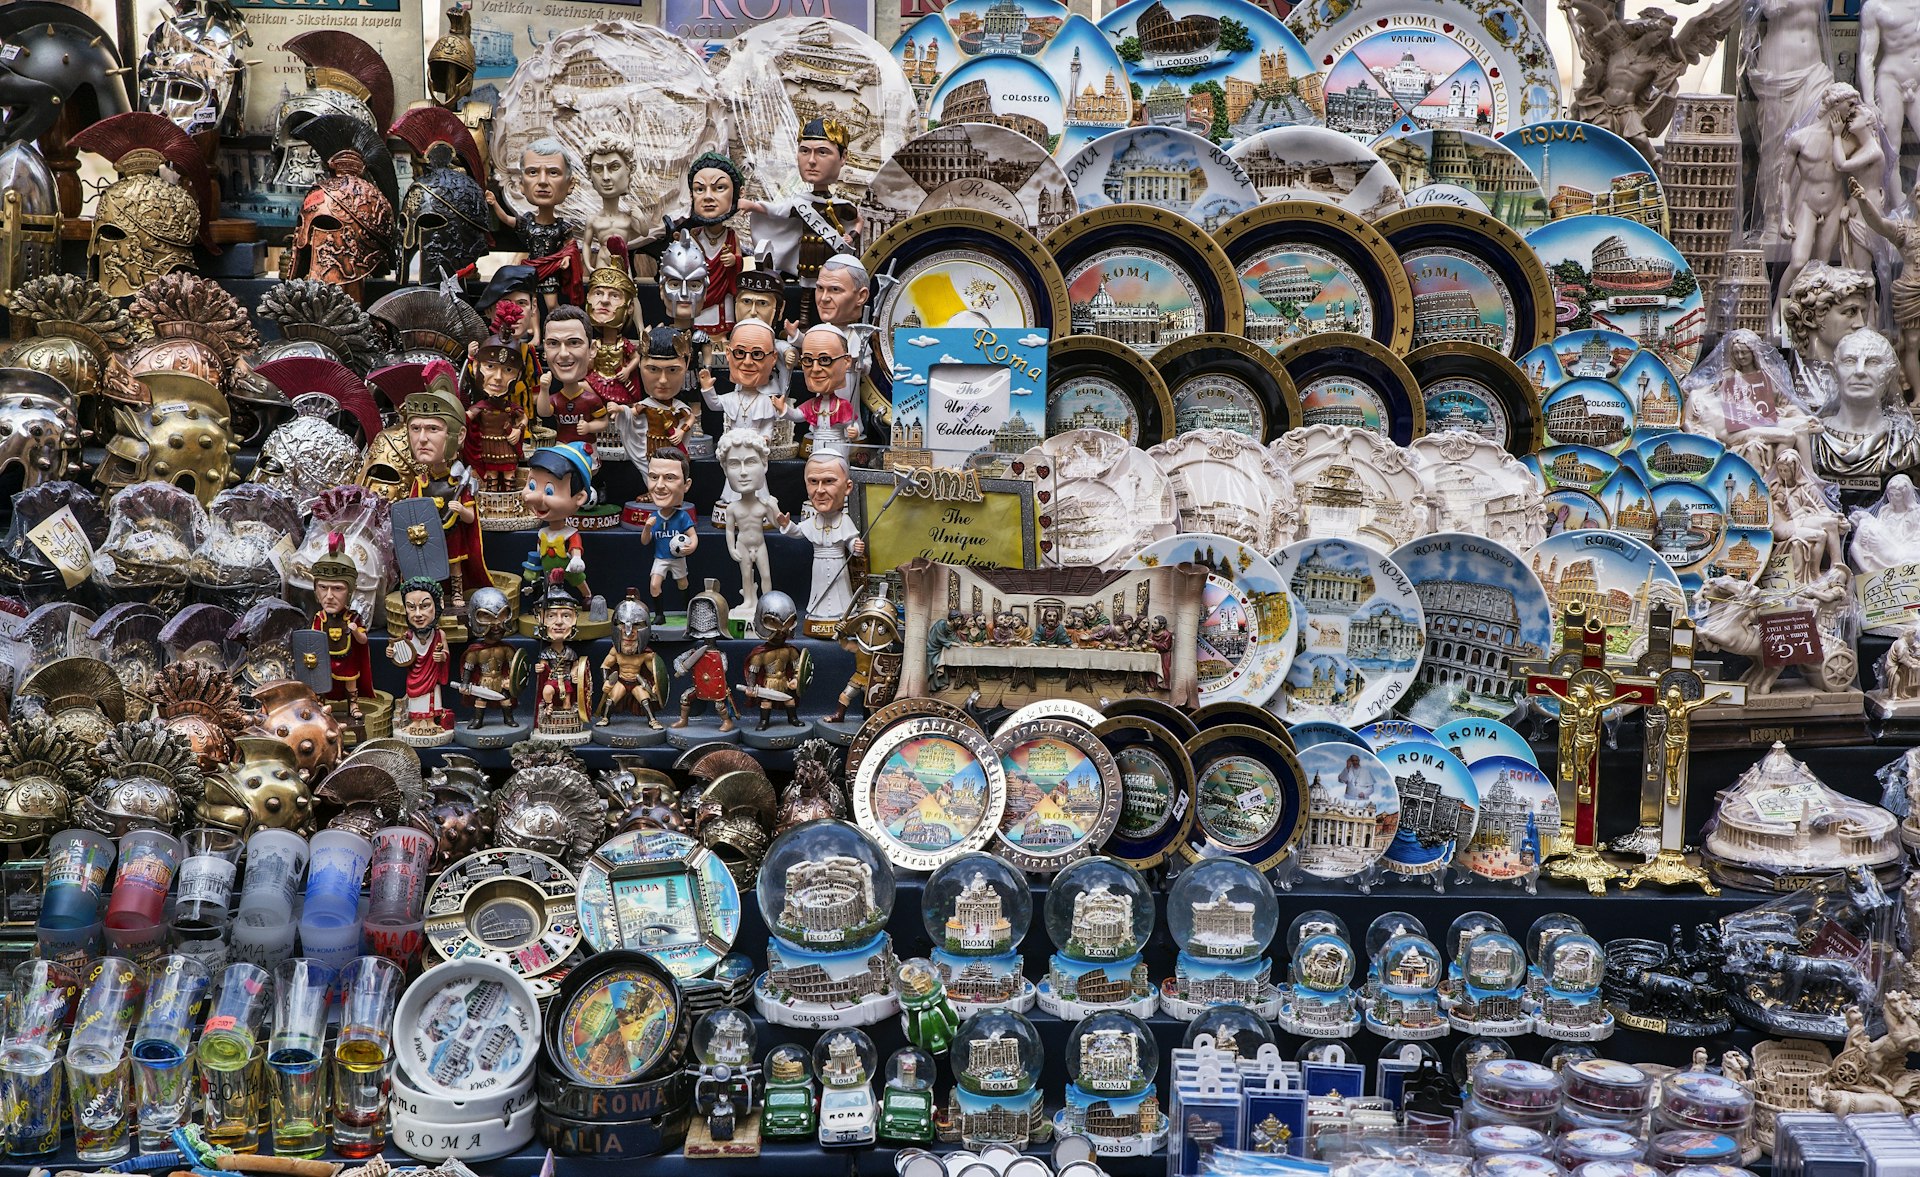 Street vendor display of souvenirs